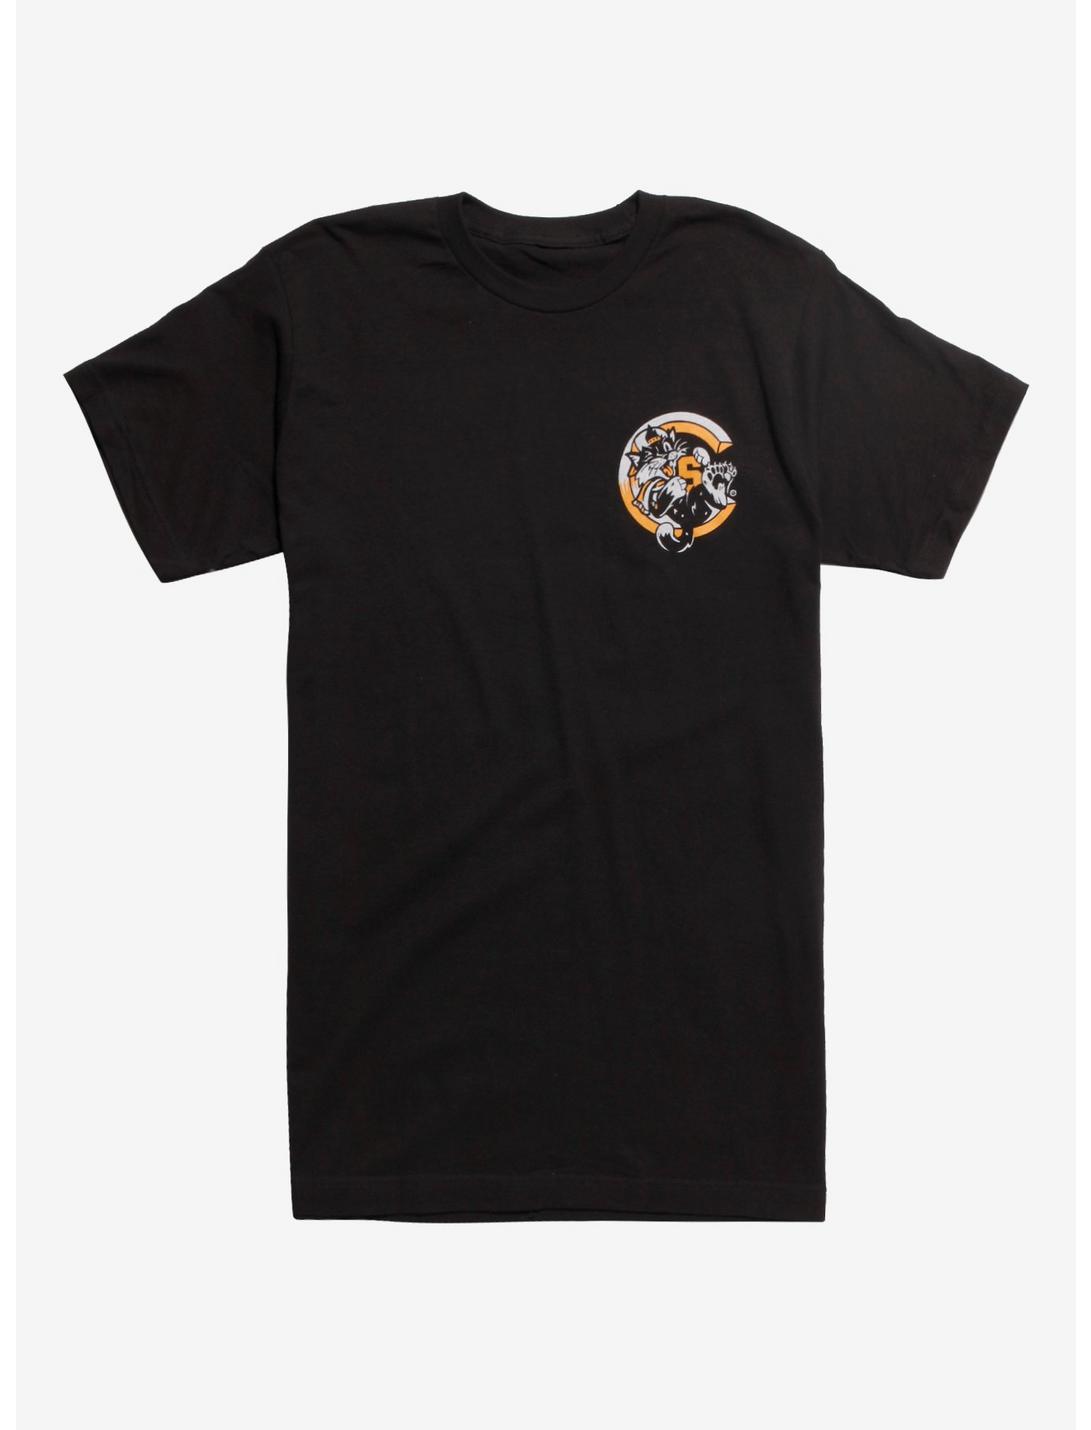 State Champs Black Cat T-Shirt, BLACK, hi-res